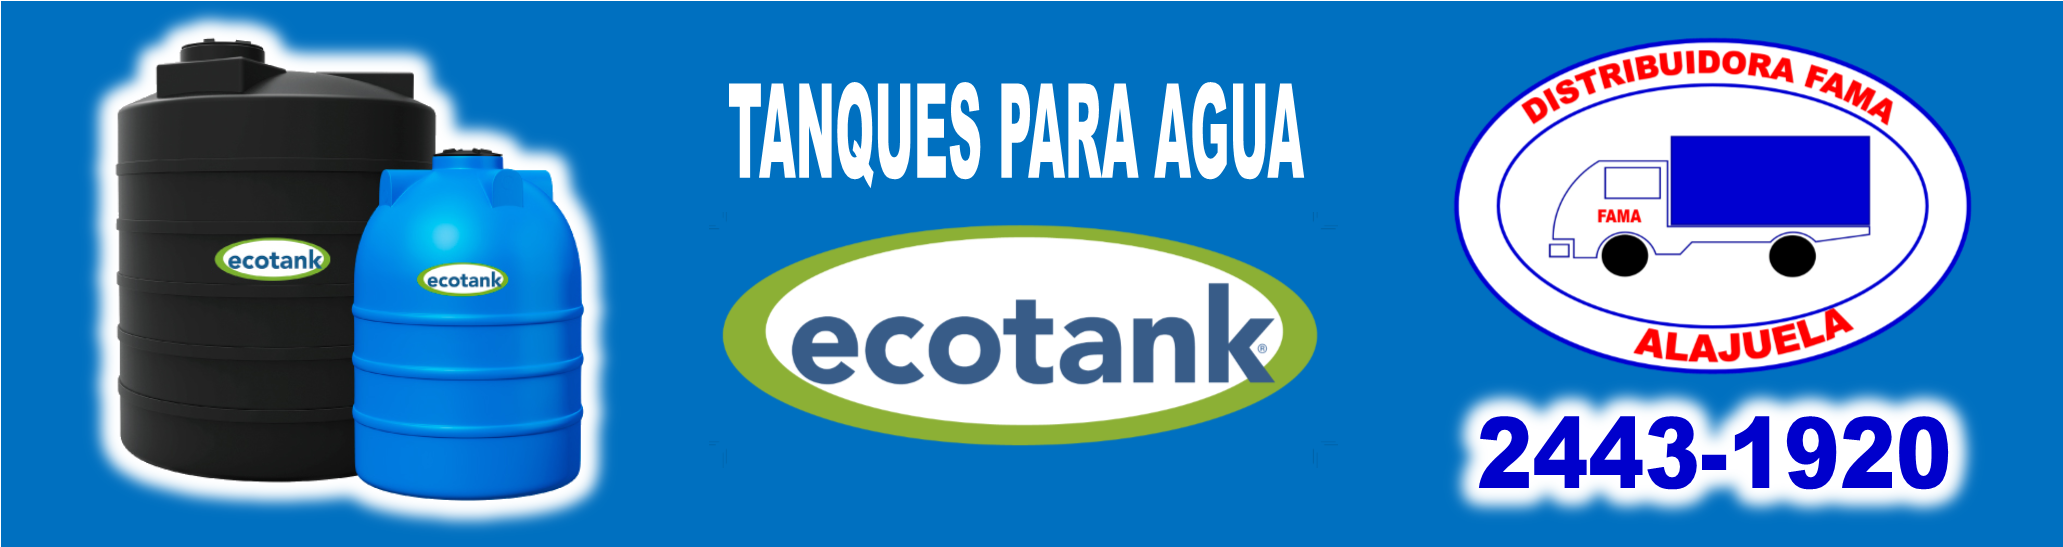 Ecotank - Distribuidora Fama